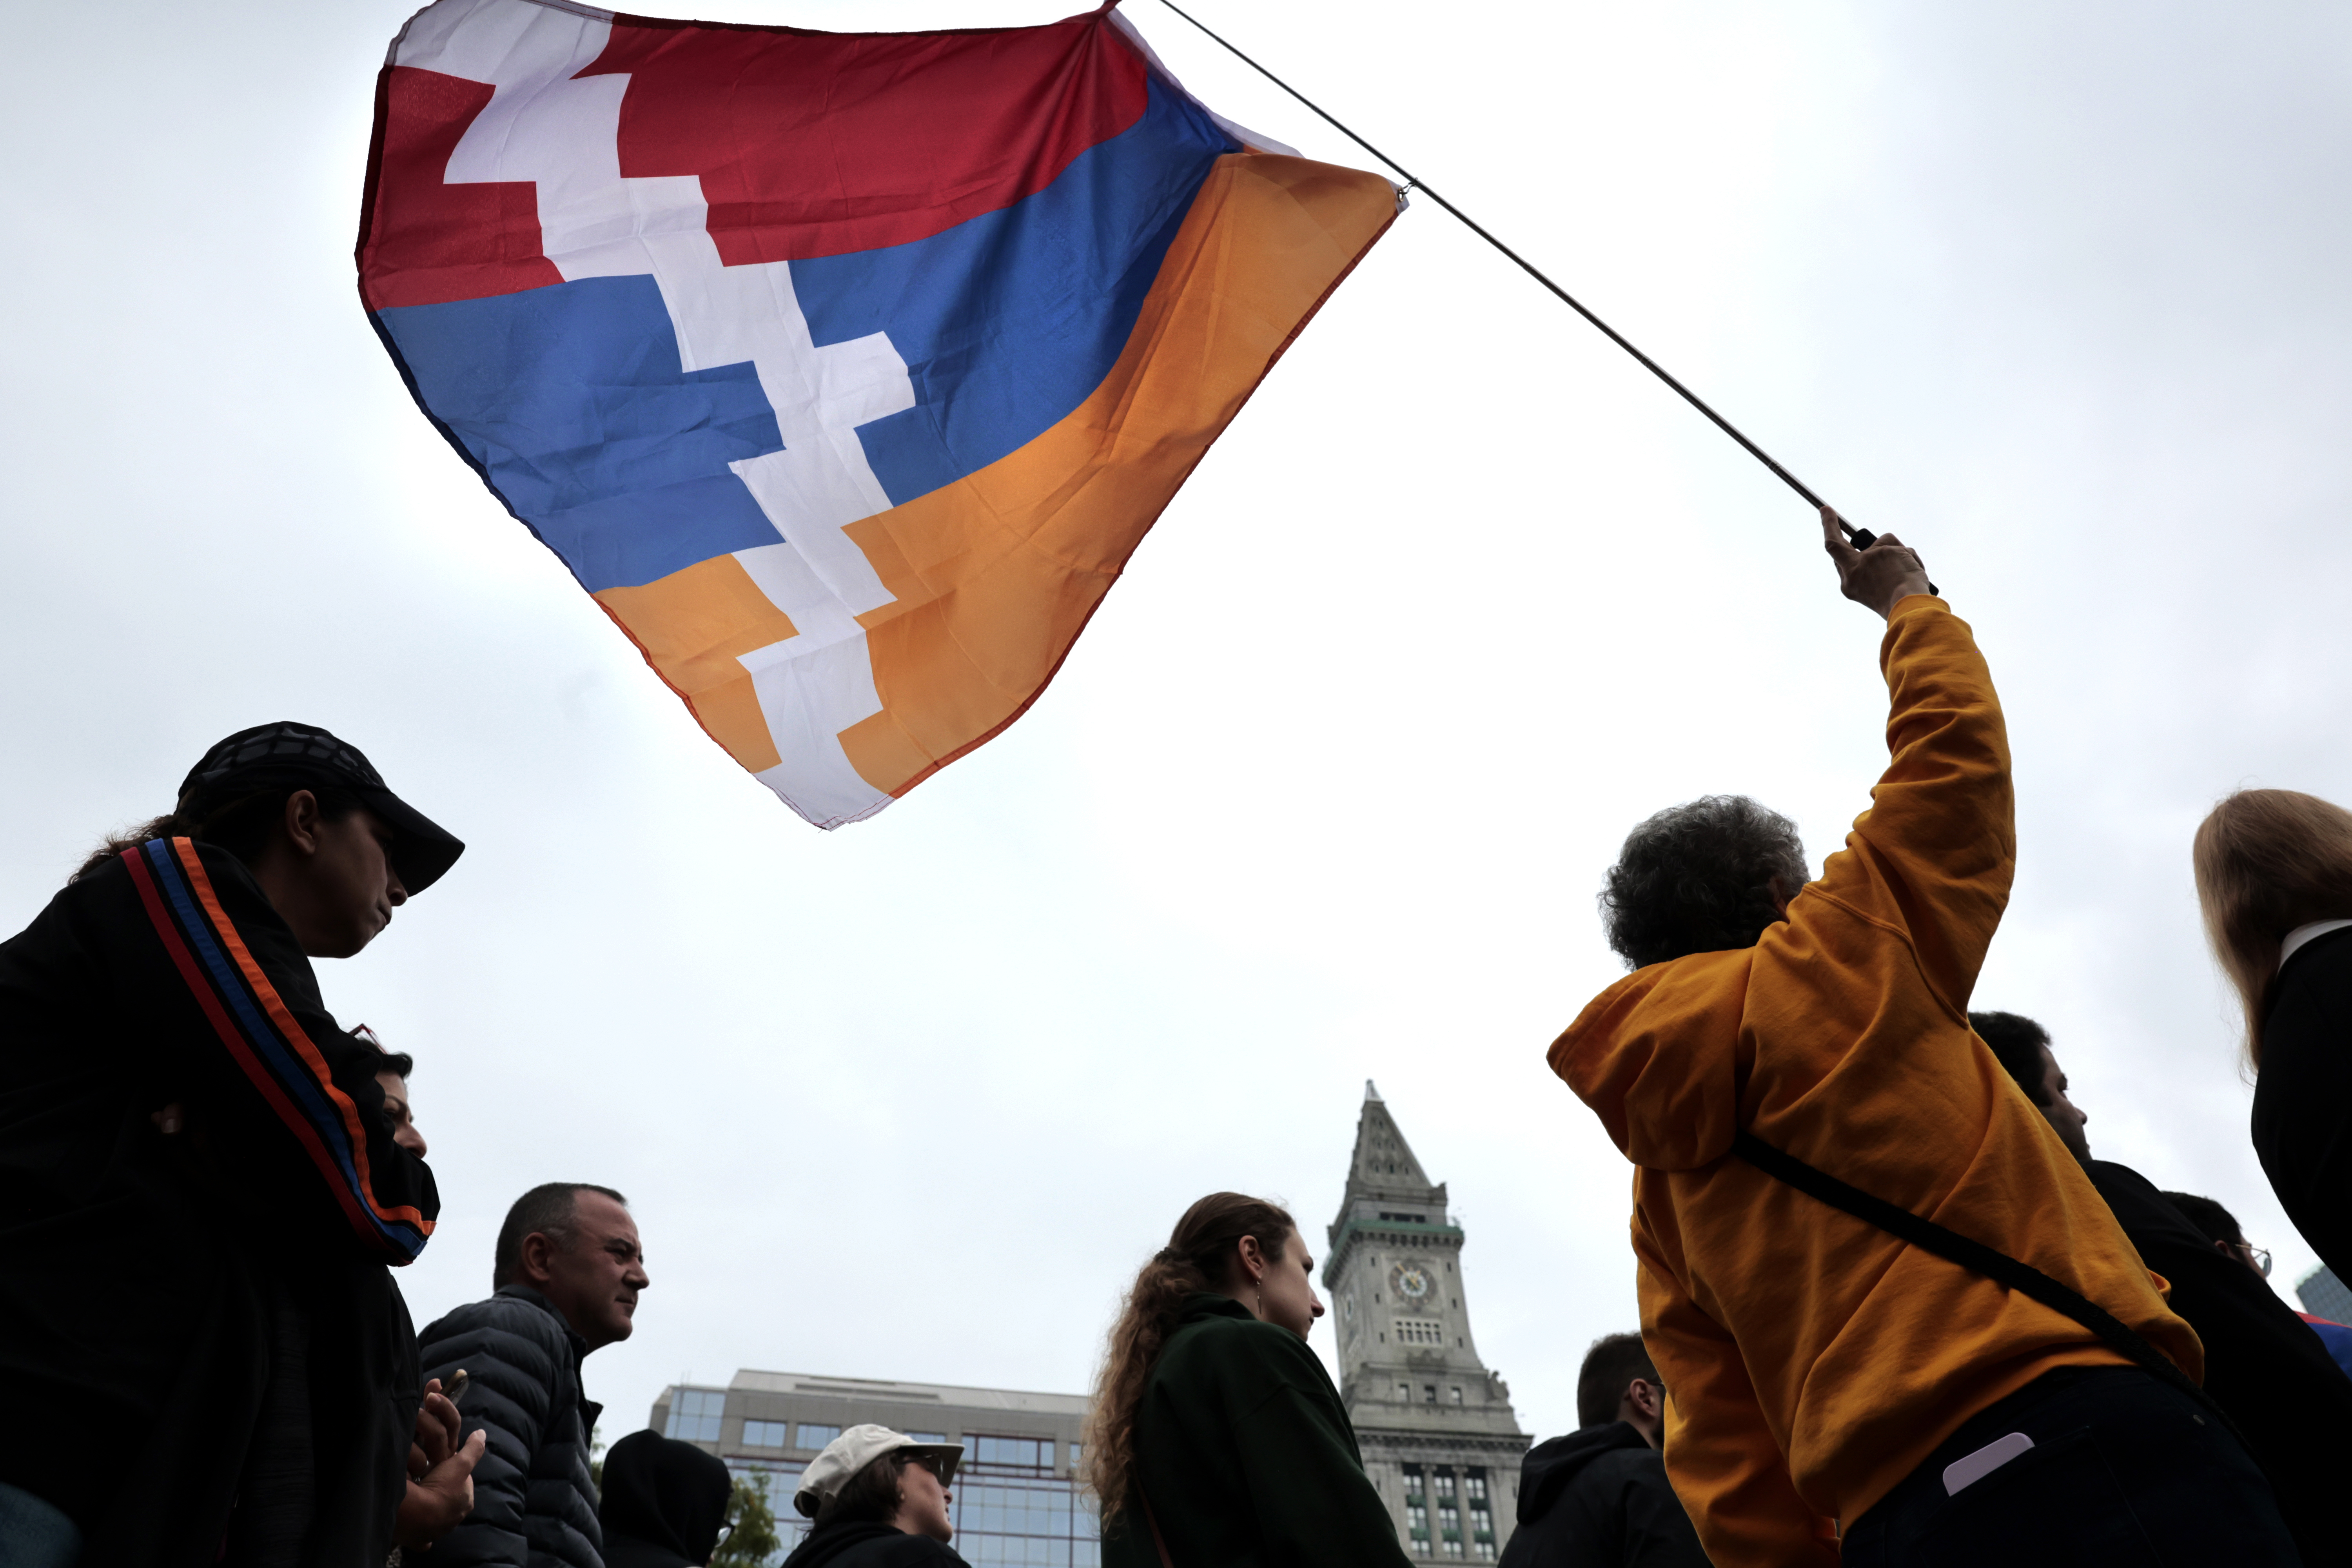 Boston's Armenian community raises awareness of Artsakh conflict